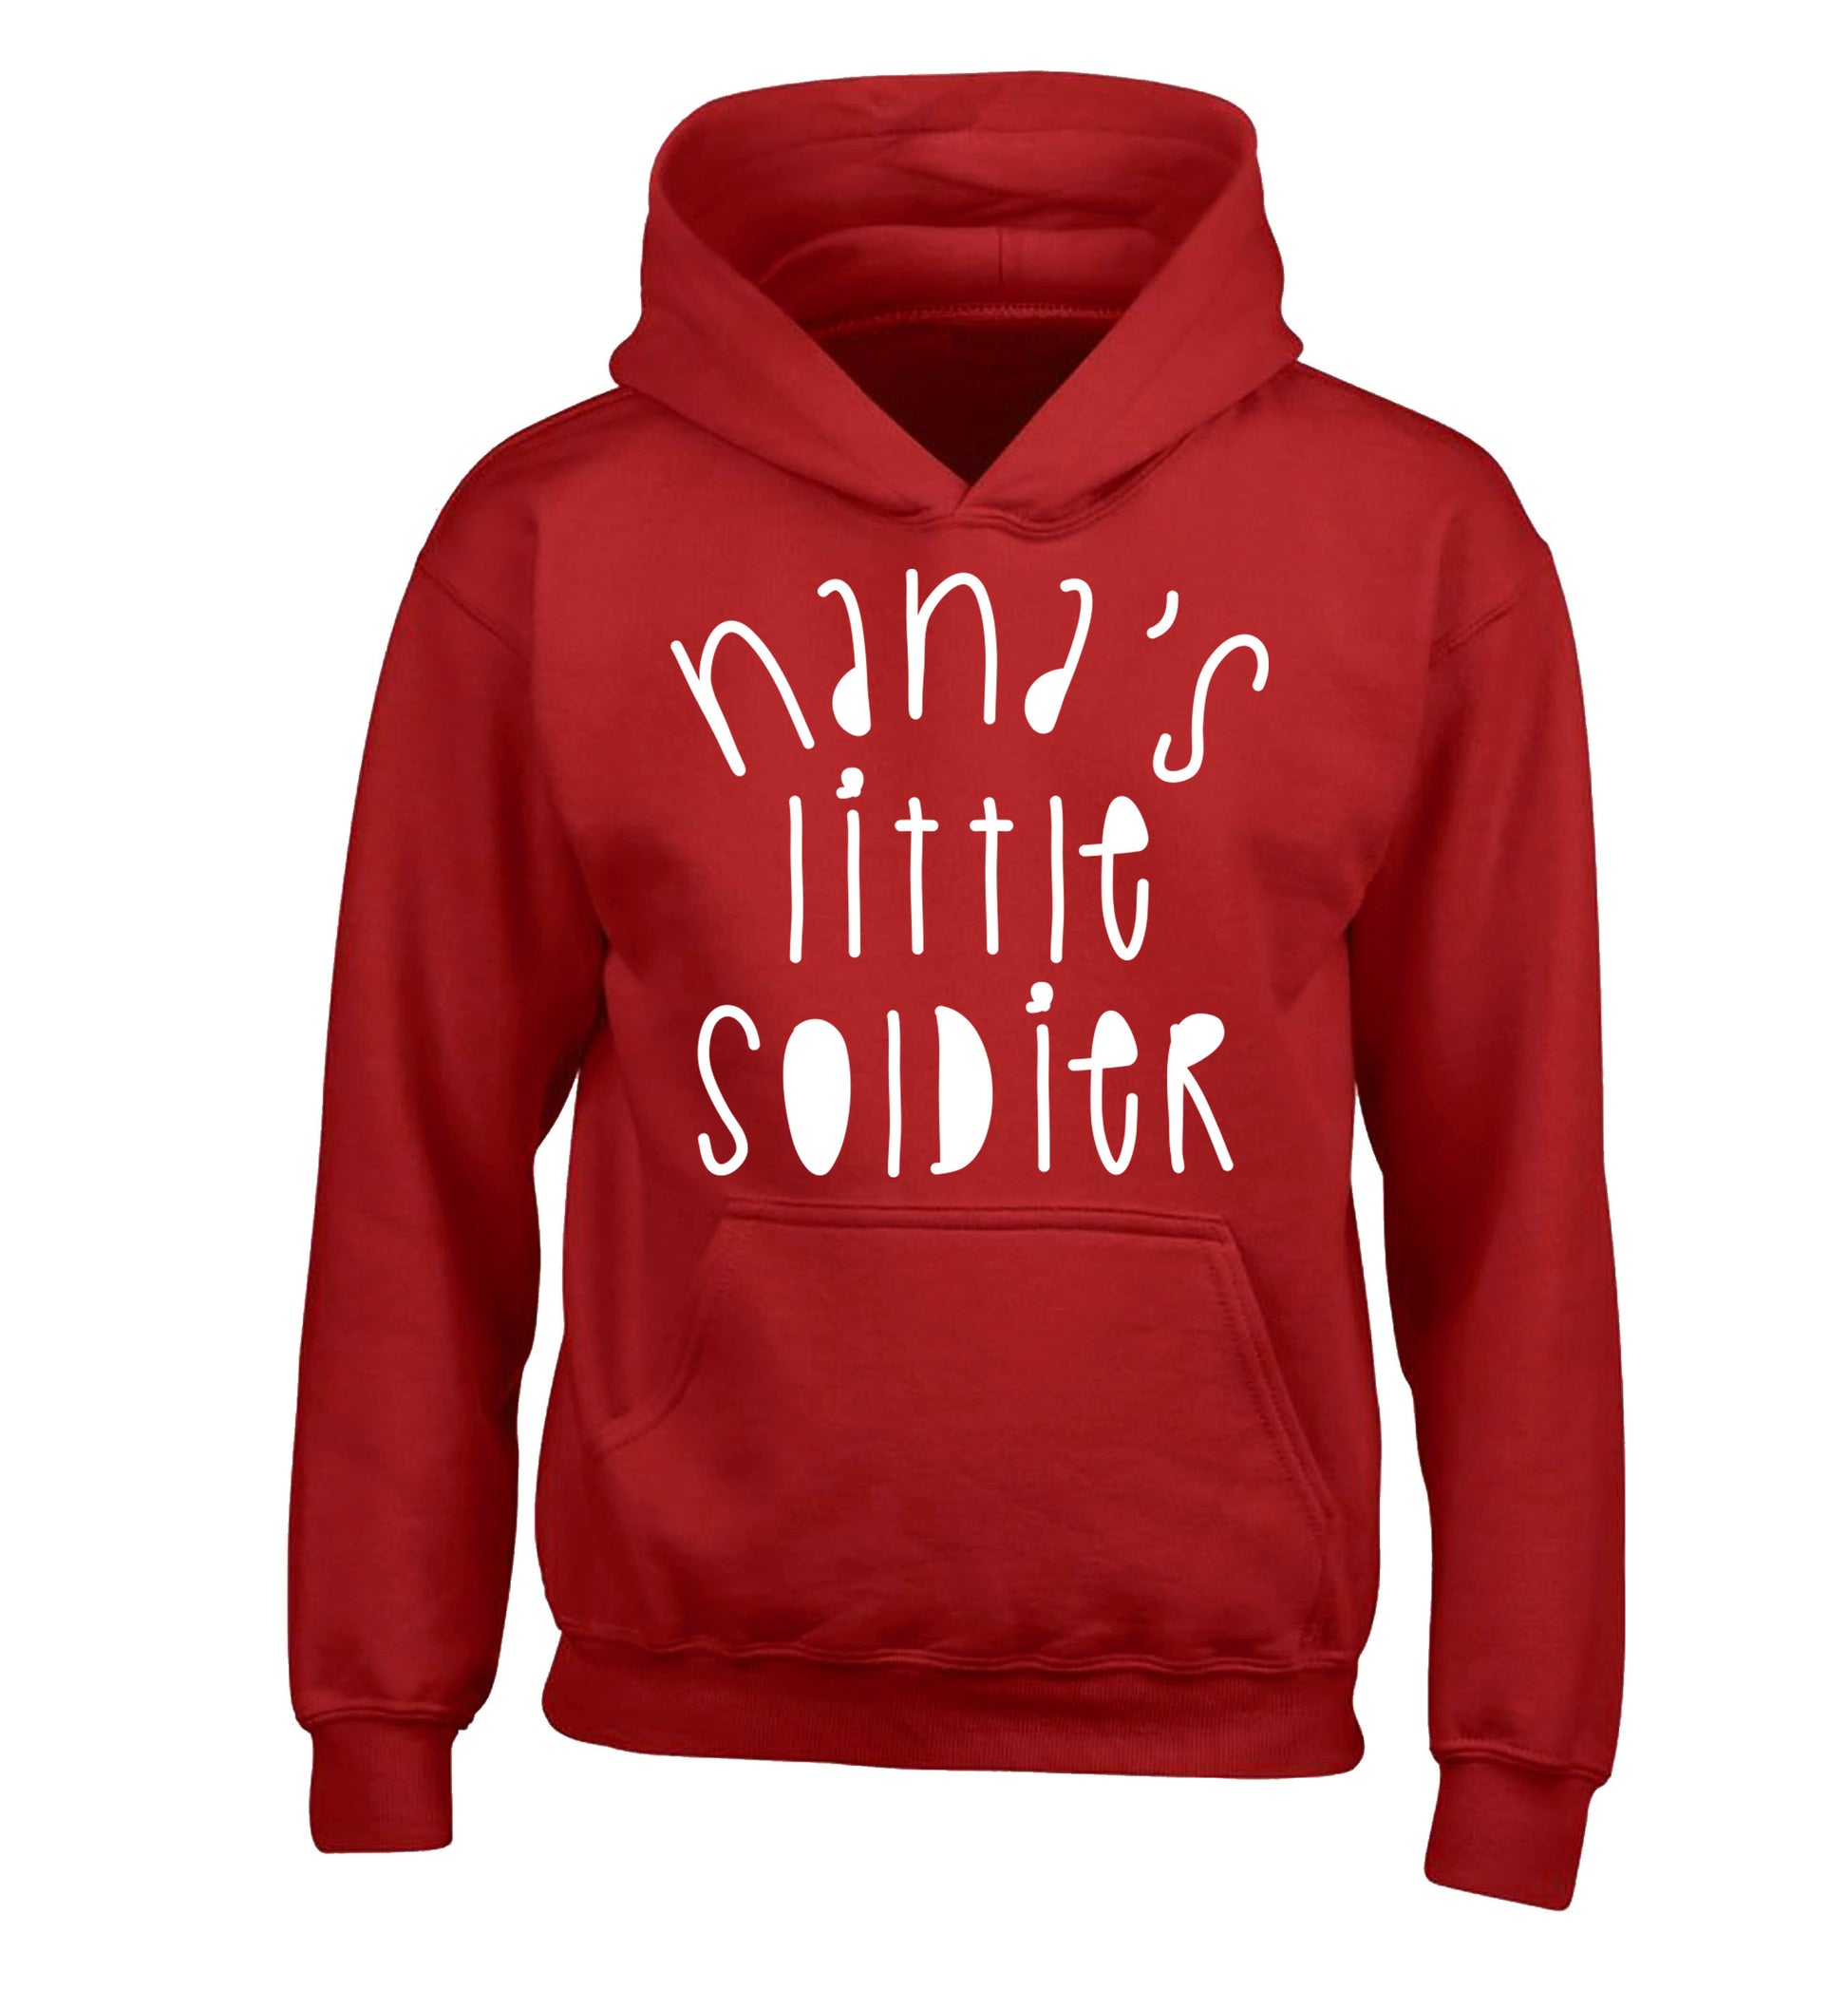 Nana's little soldier children's red hoodie 12-14 Years